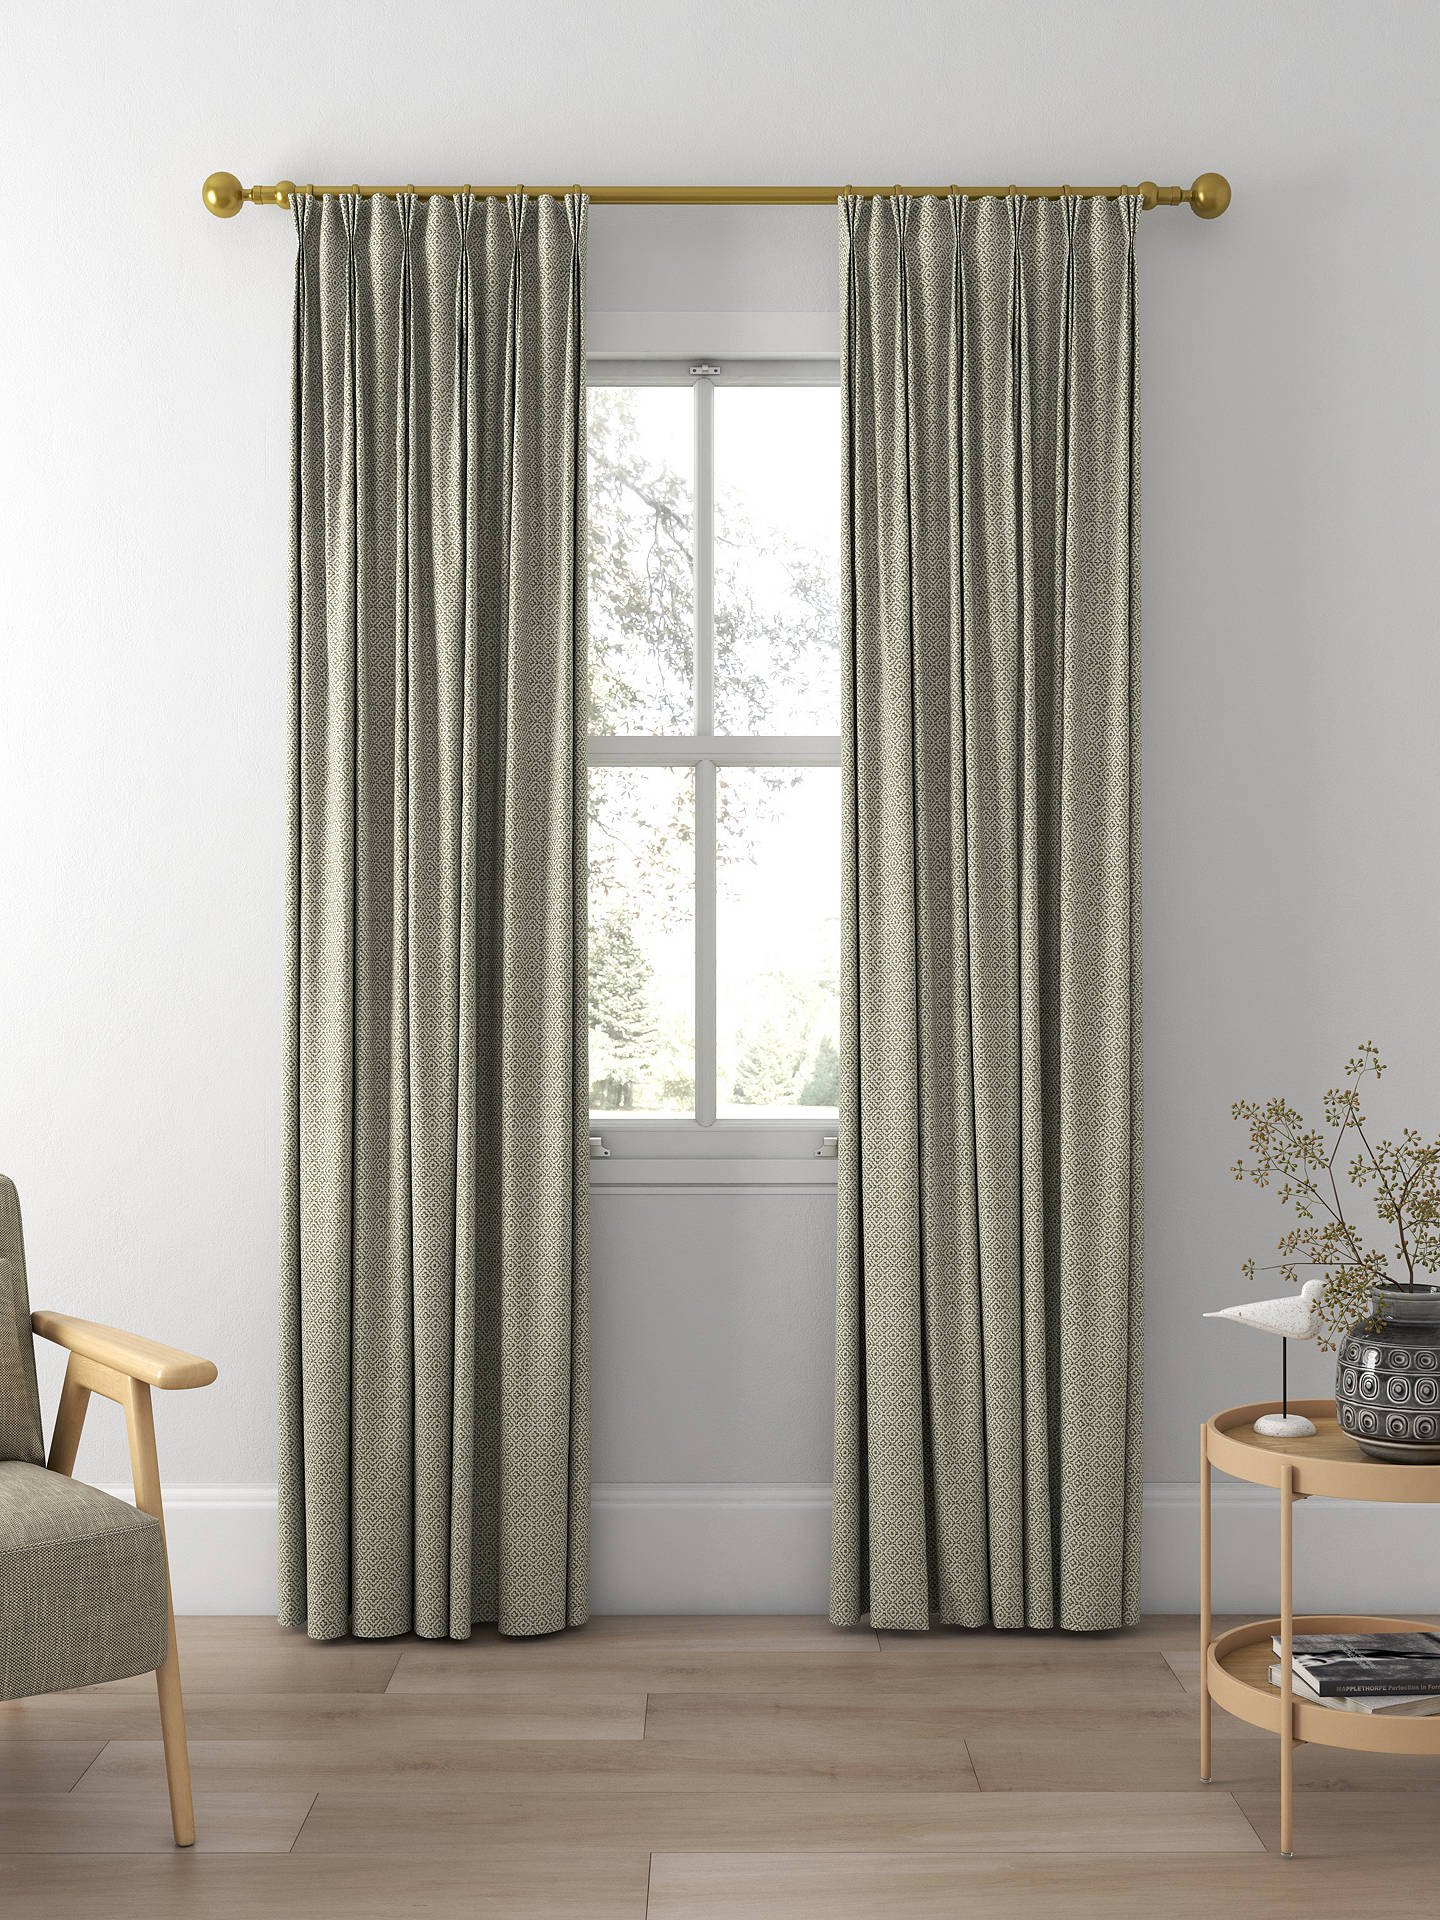 Sanderson Linden Made to Measure Curtains, Celadon